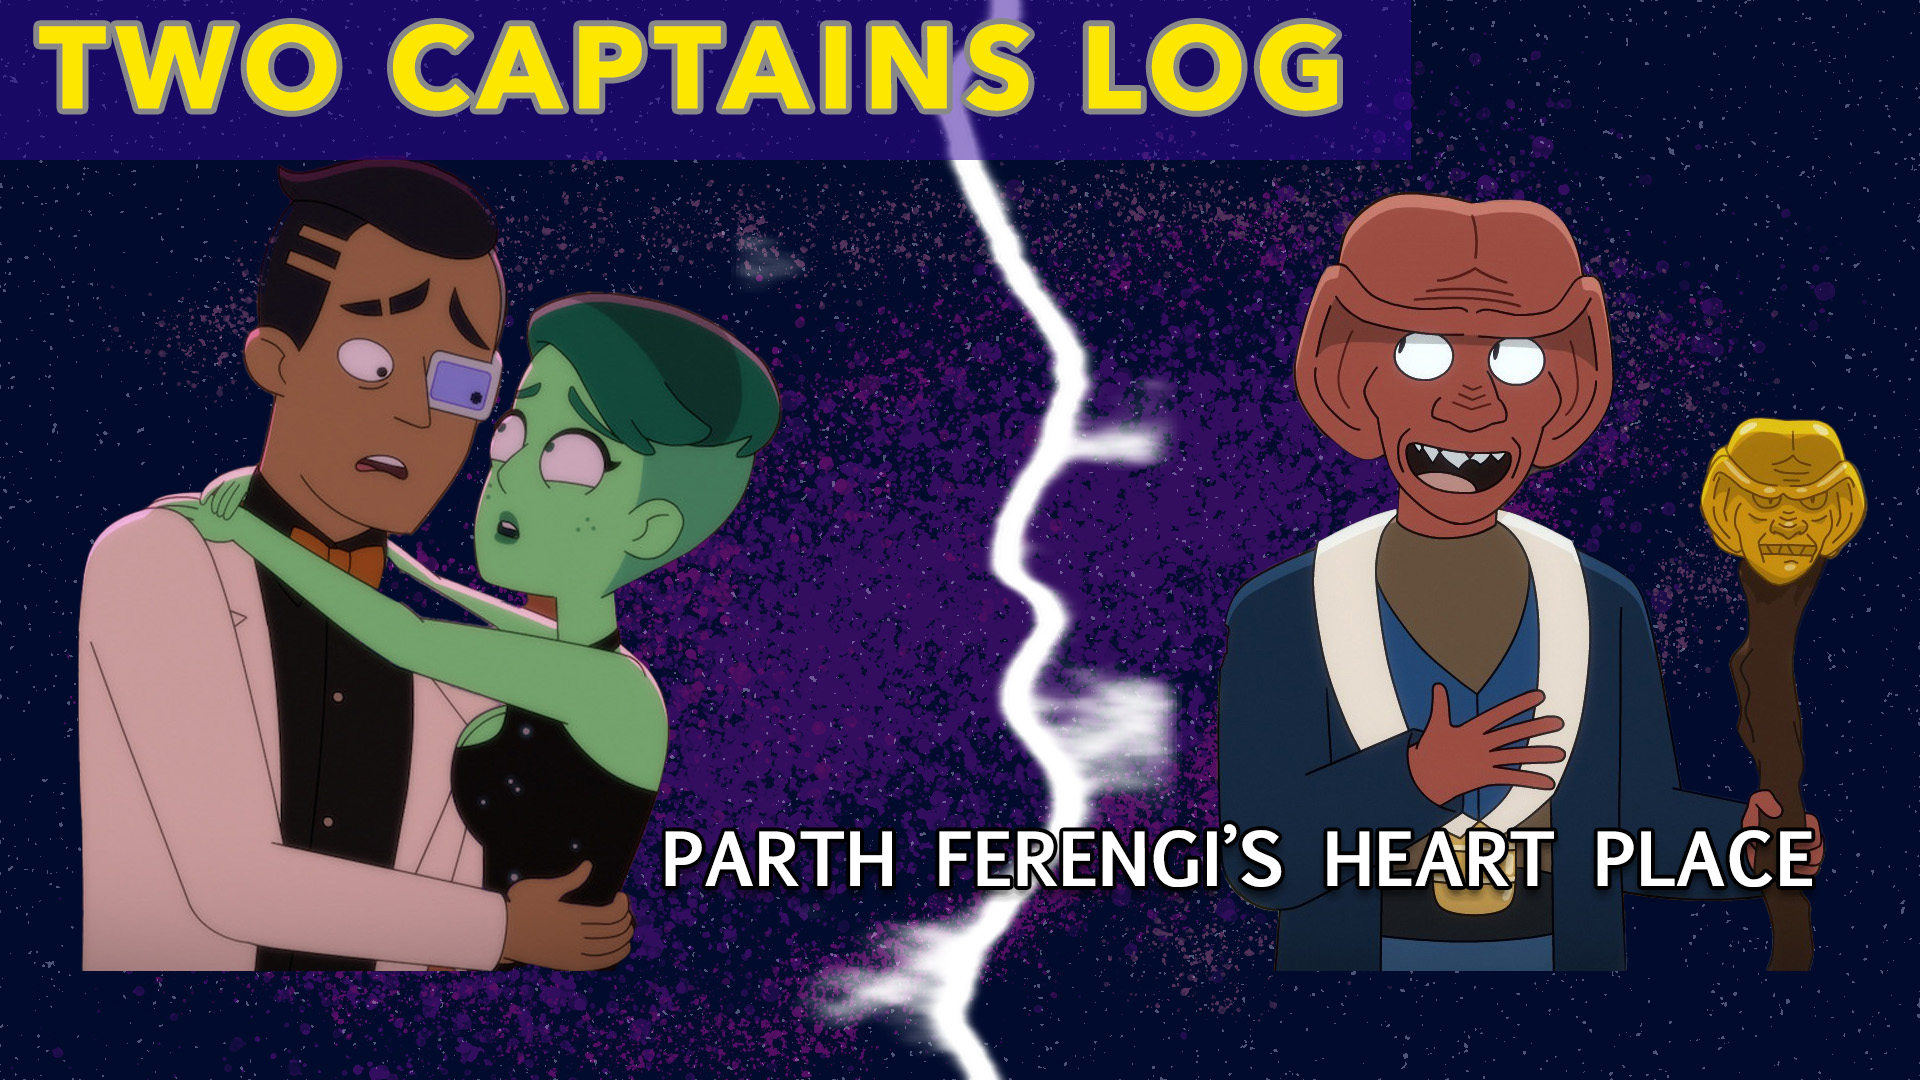 Star Trek: Lower Decks "Parth Ferengi's Heart Place"